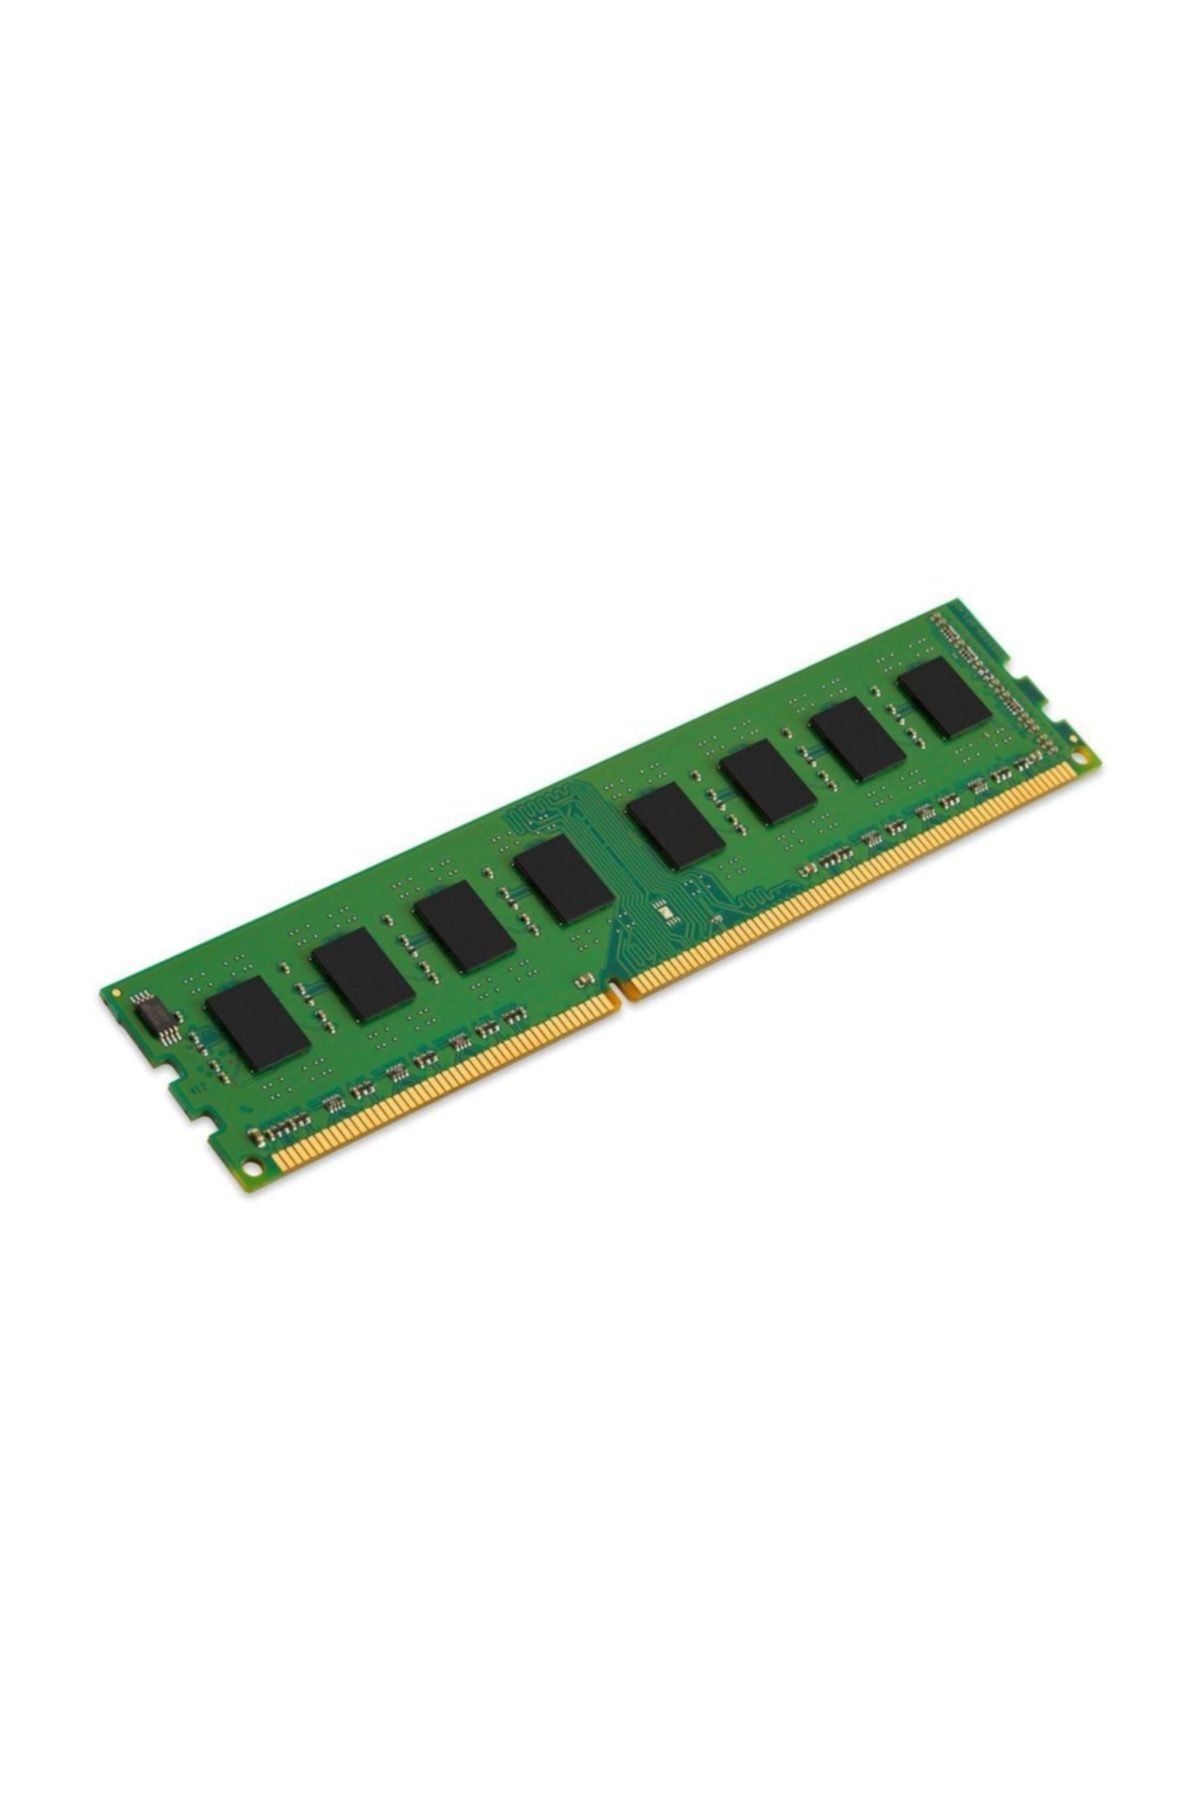 Kingston 8GB DDR3 1600MHz -KVR16N11/8